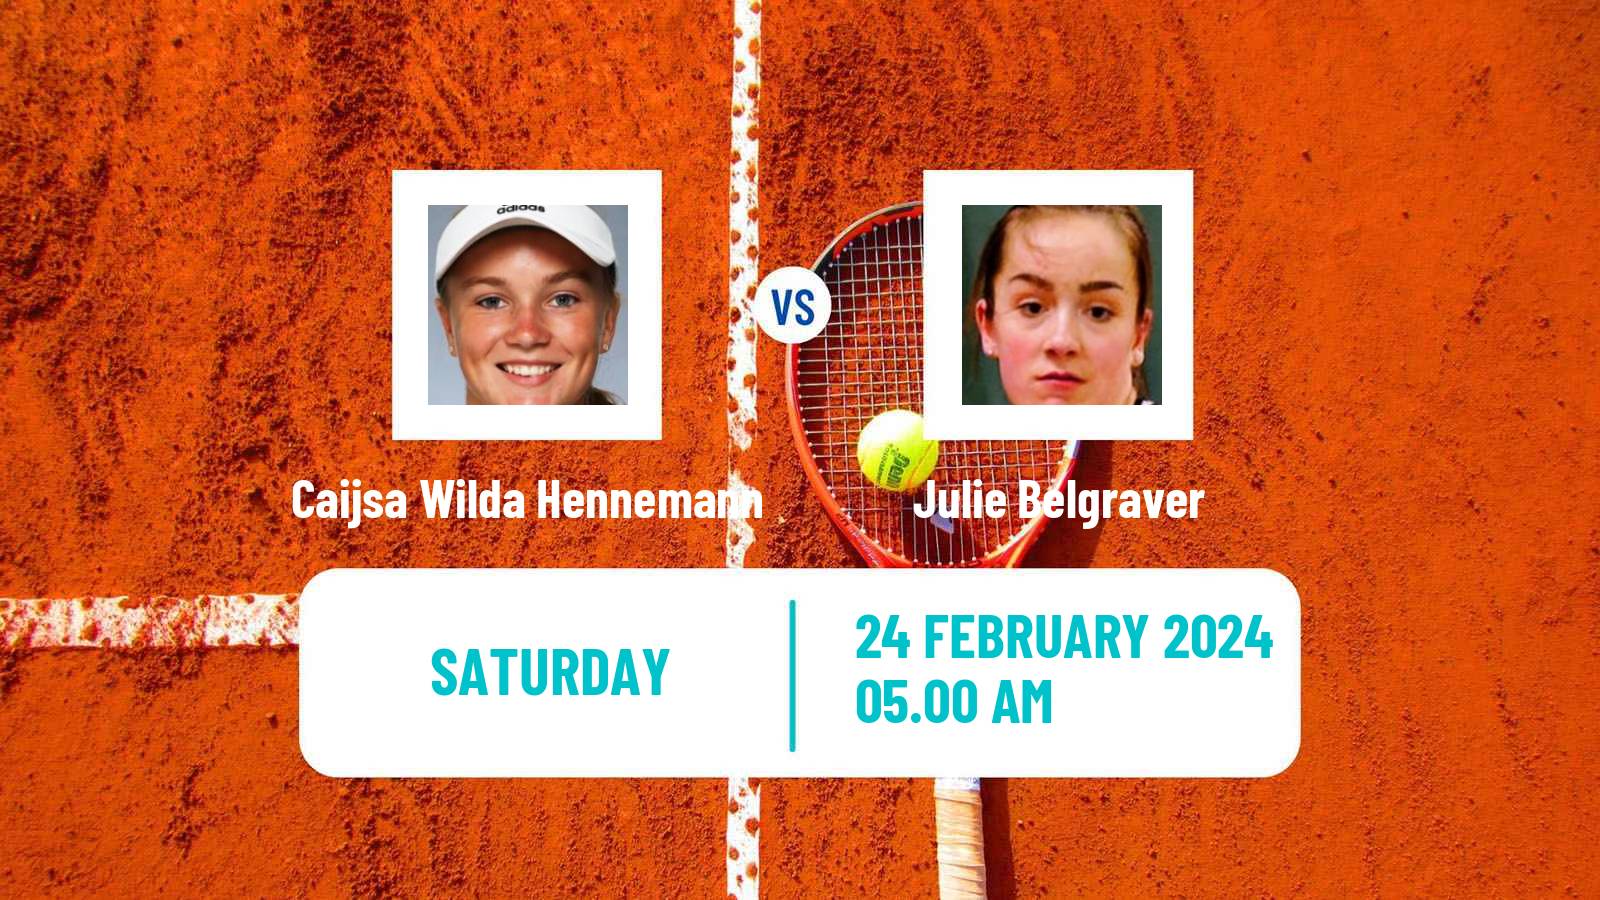 Tennis ITF W15 Manacor 2 Women Caijsa Wilda Hennemann - Julie Belgraver